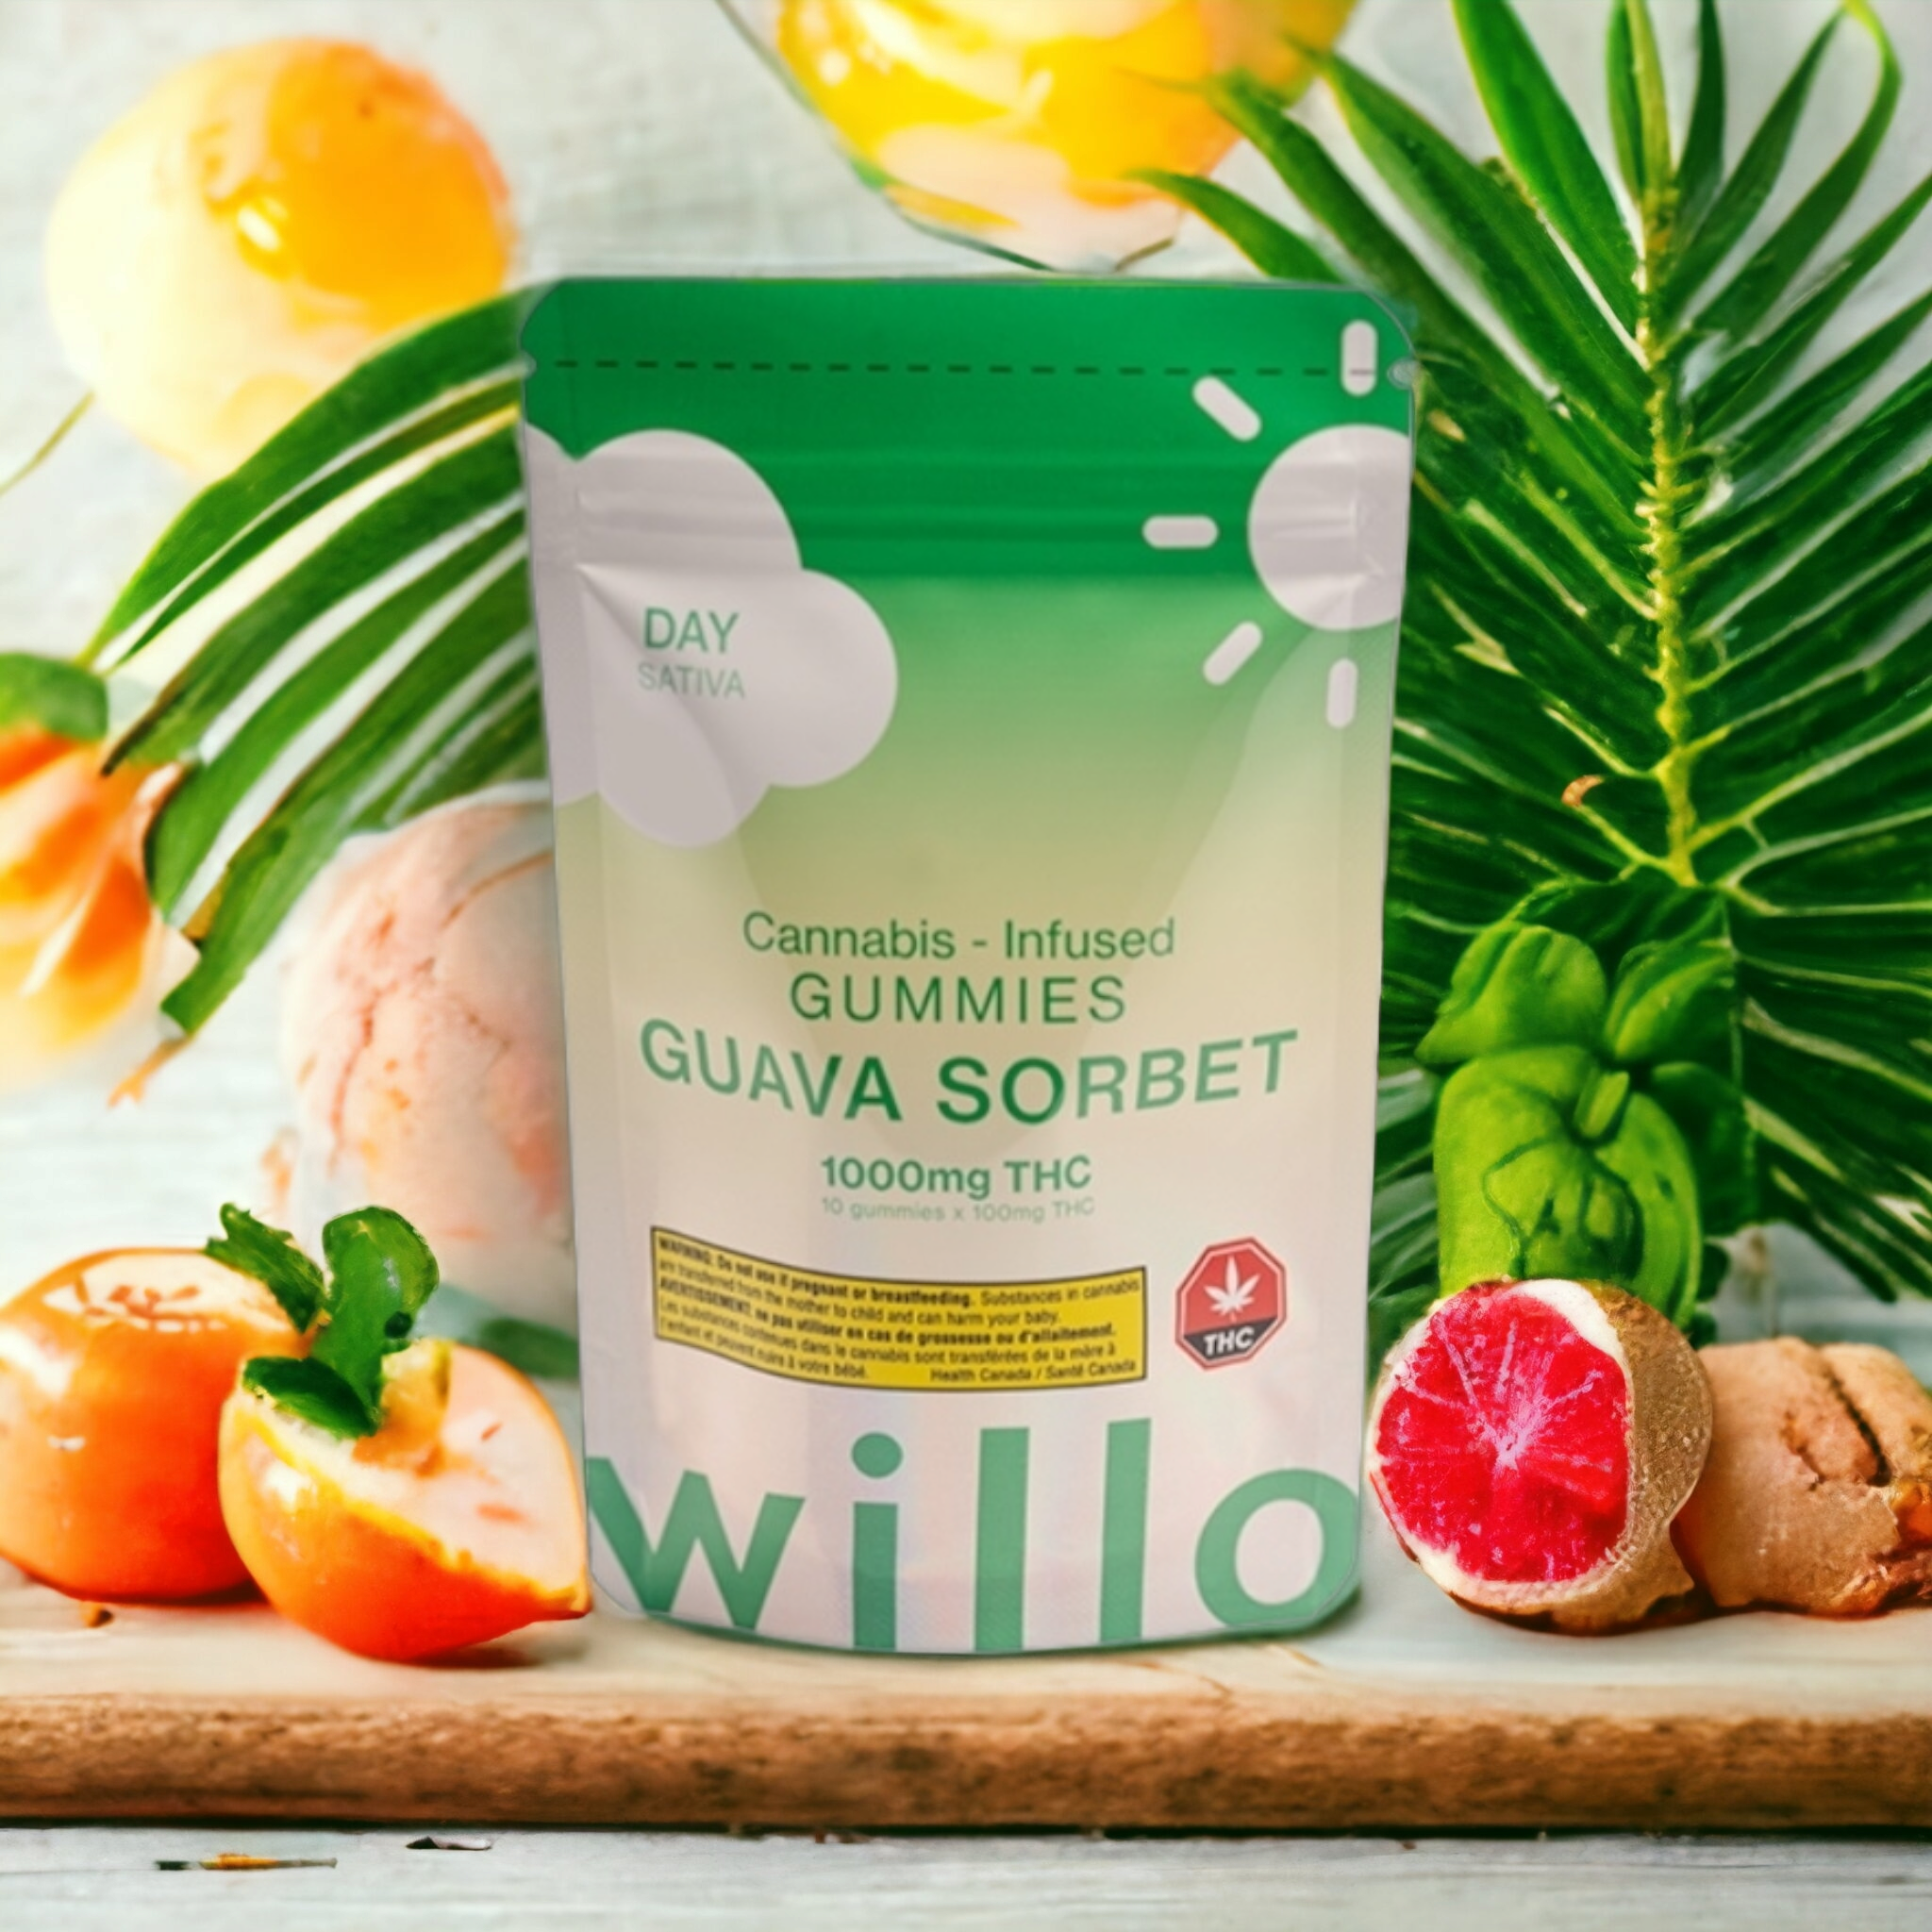 Willo – 1000mg THC Guava Sorbet (Day) Gummies